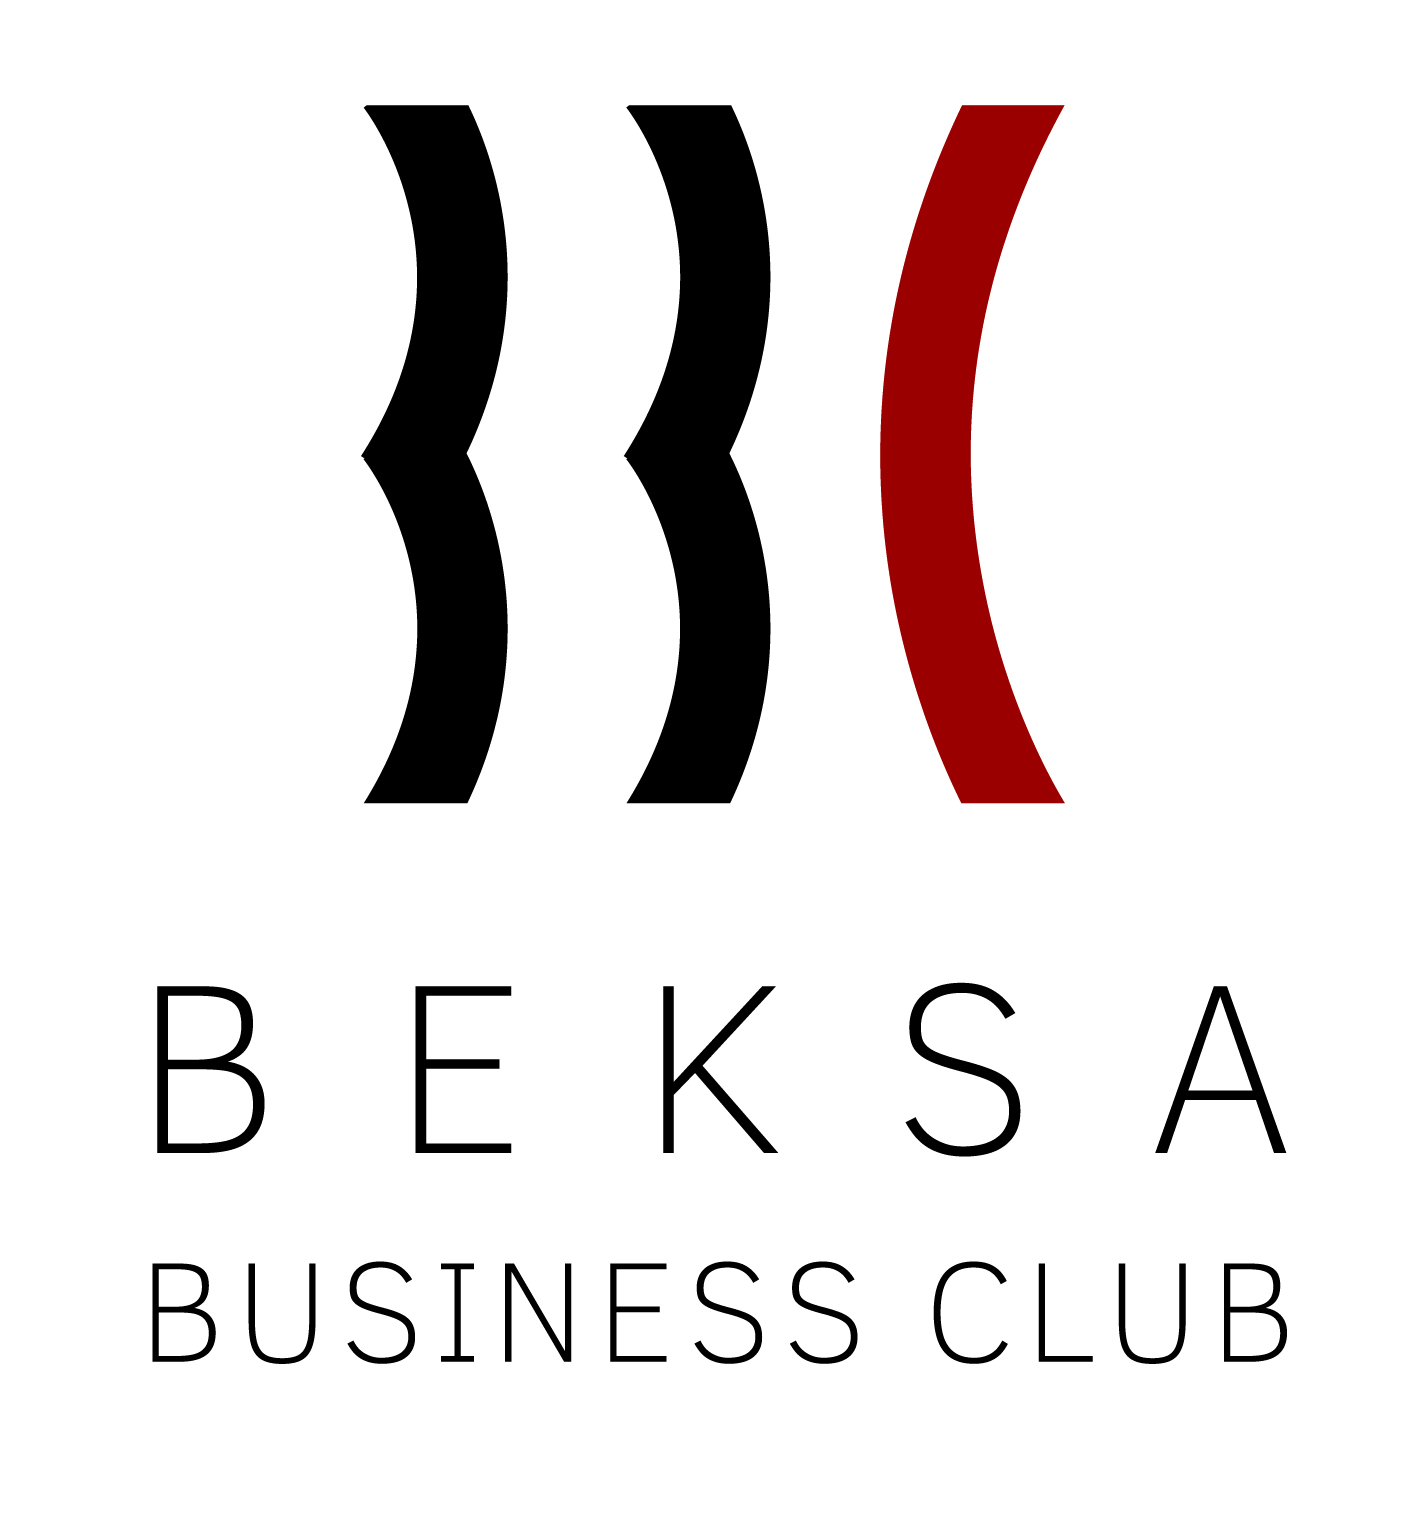 Beksa Business Club